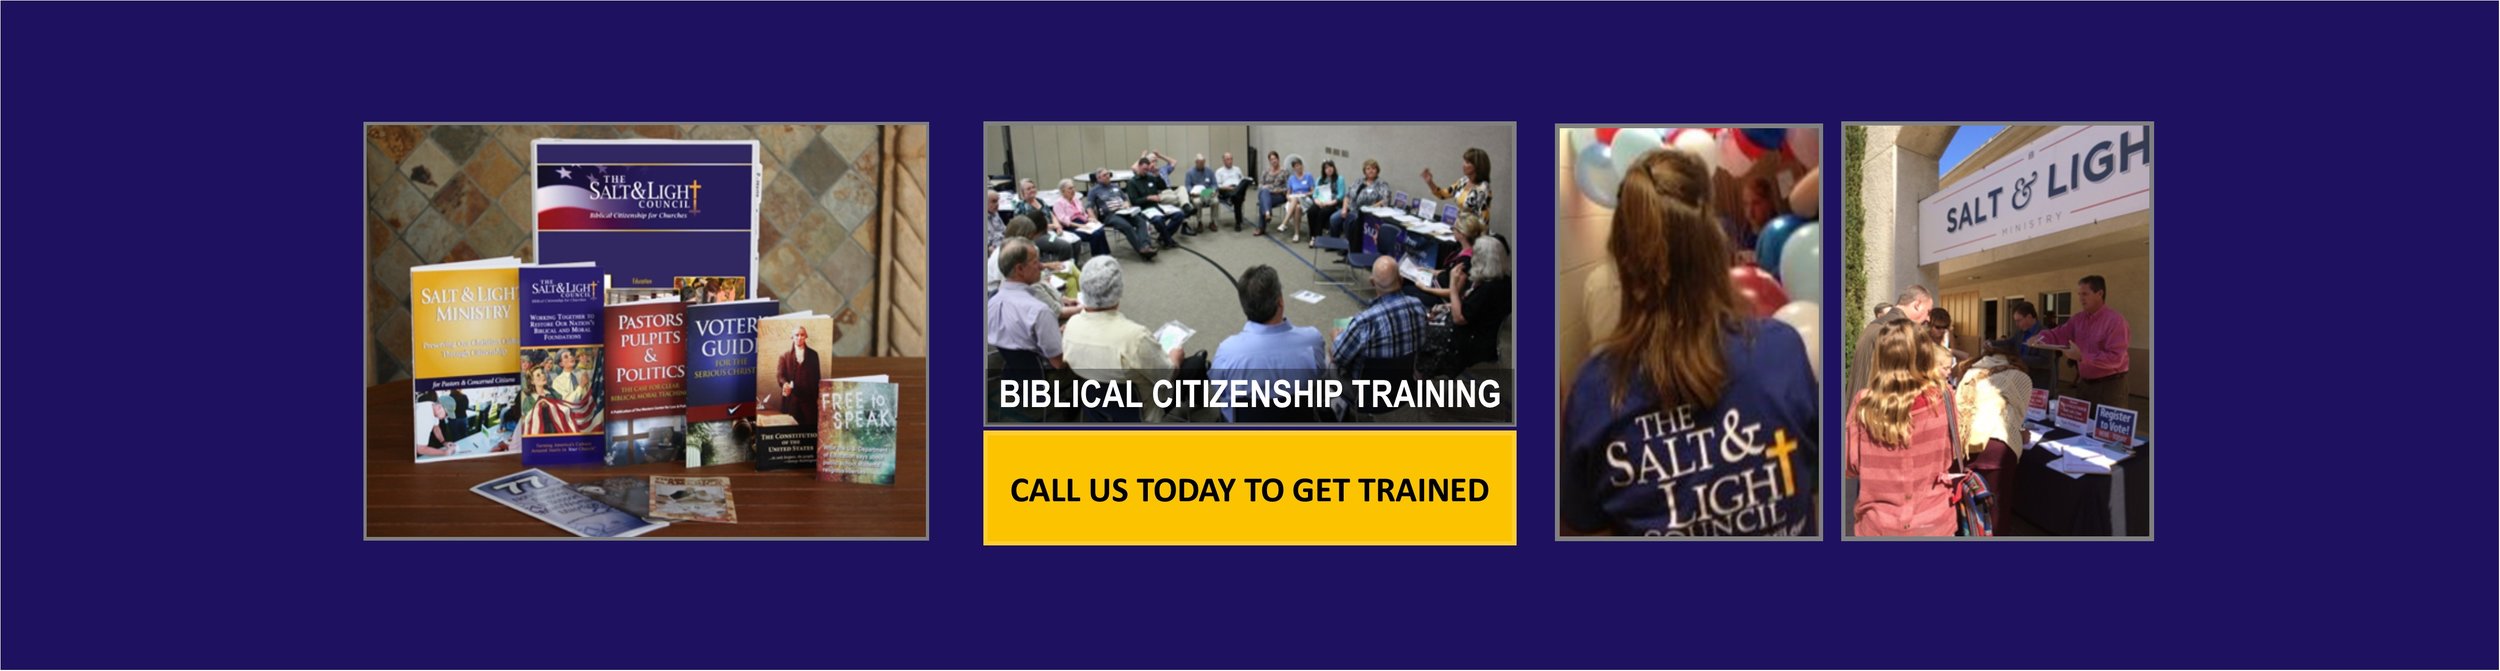 Biblical Citizenship Training